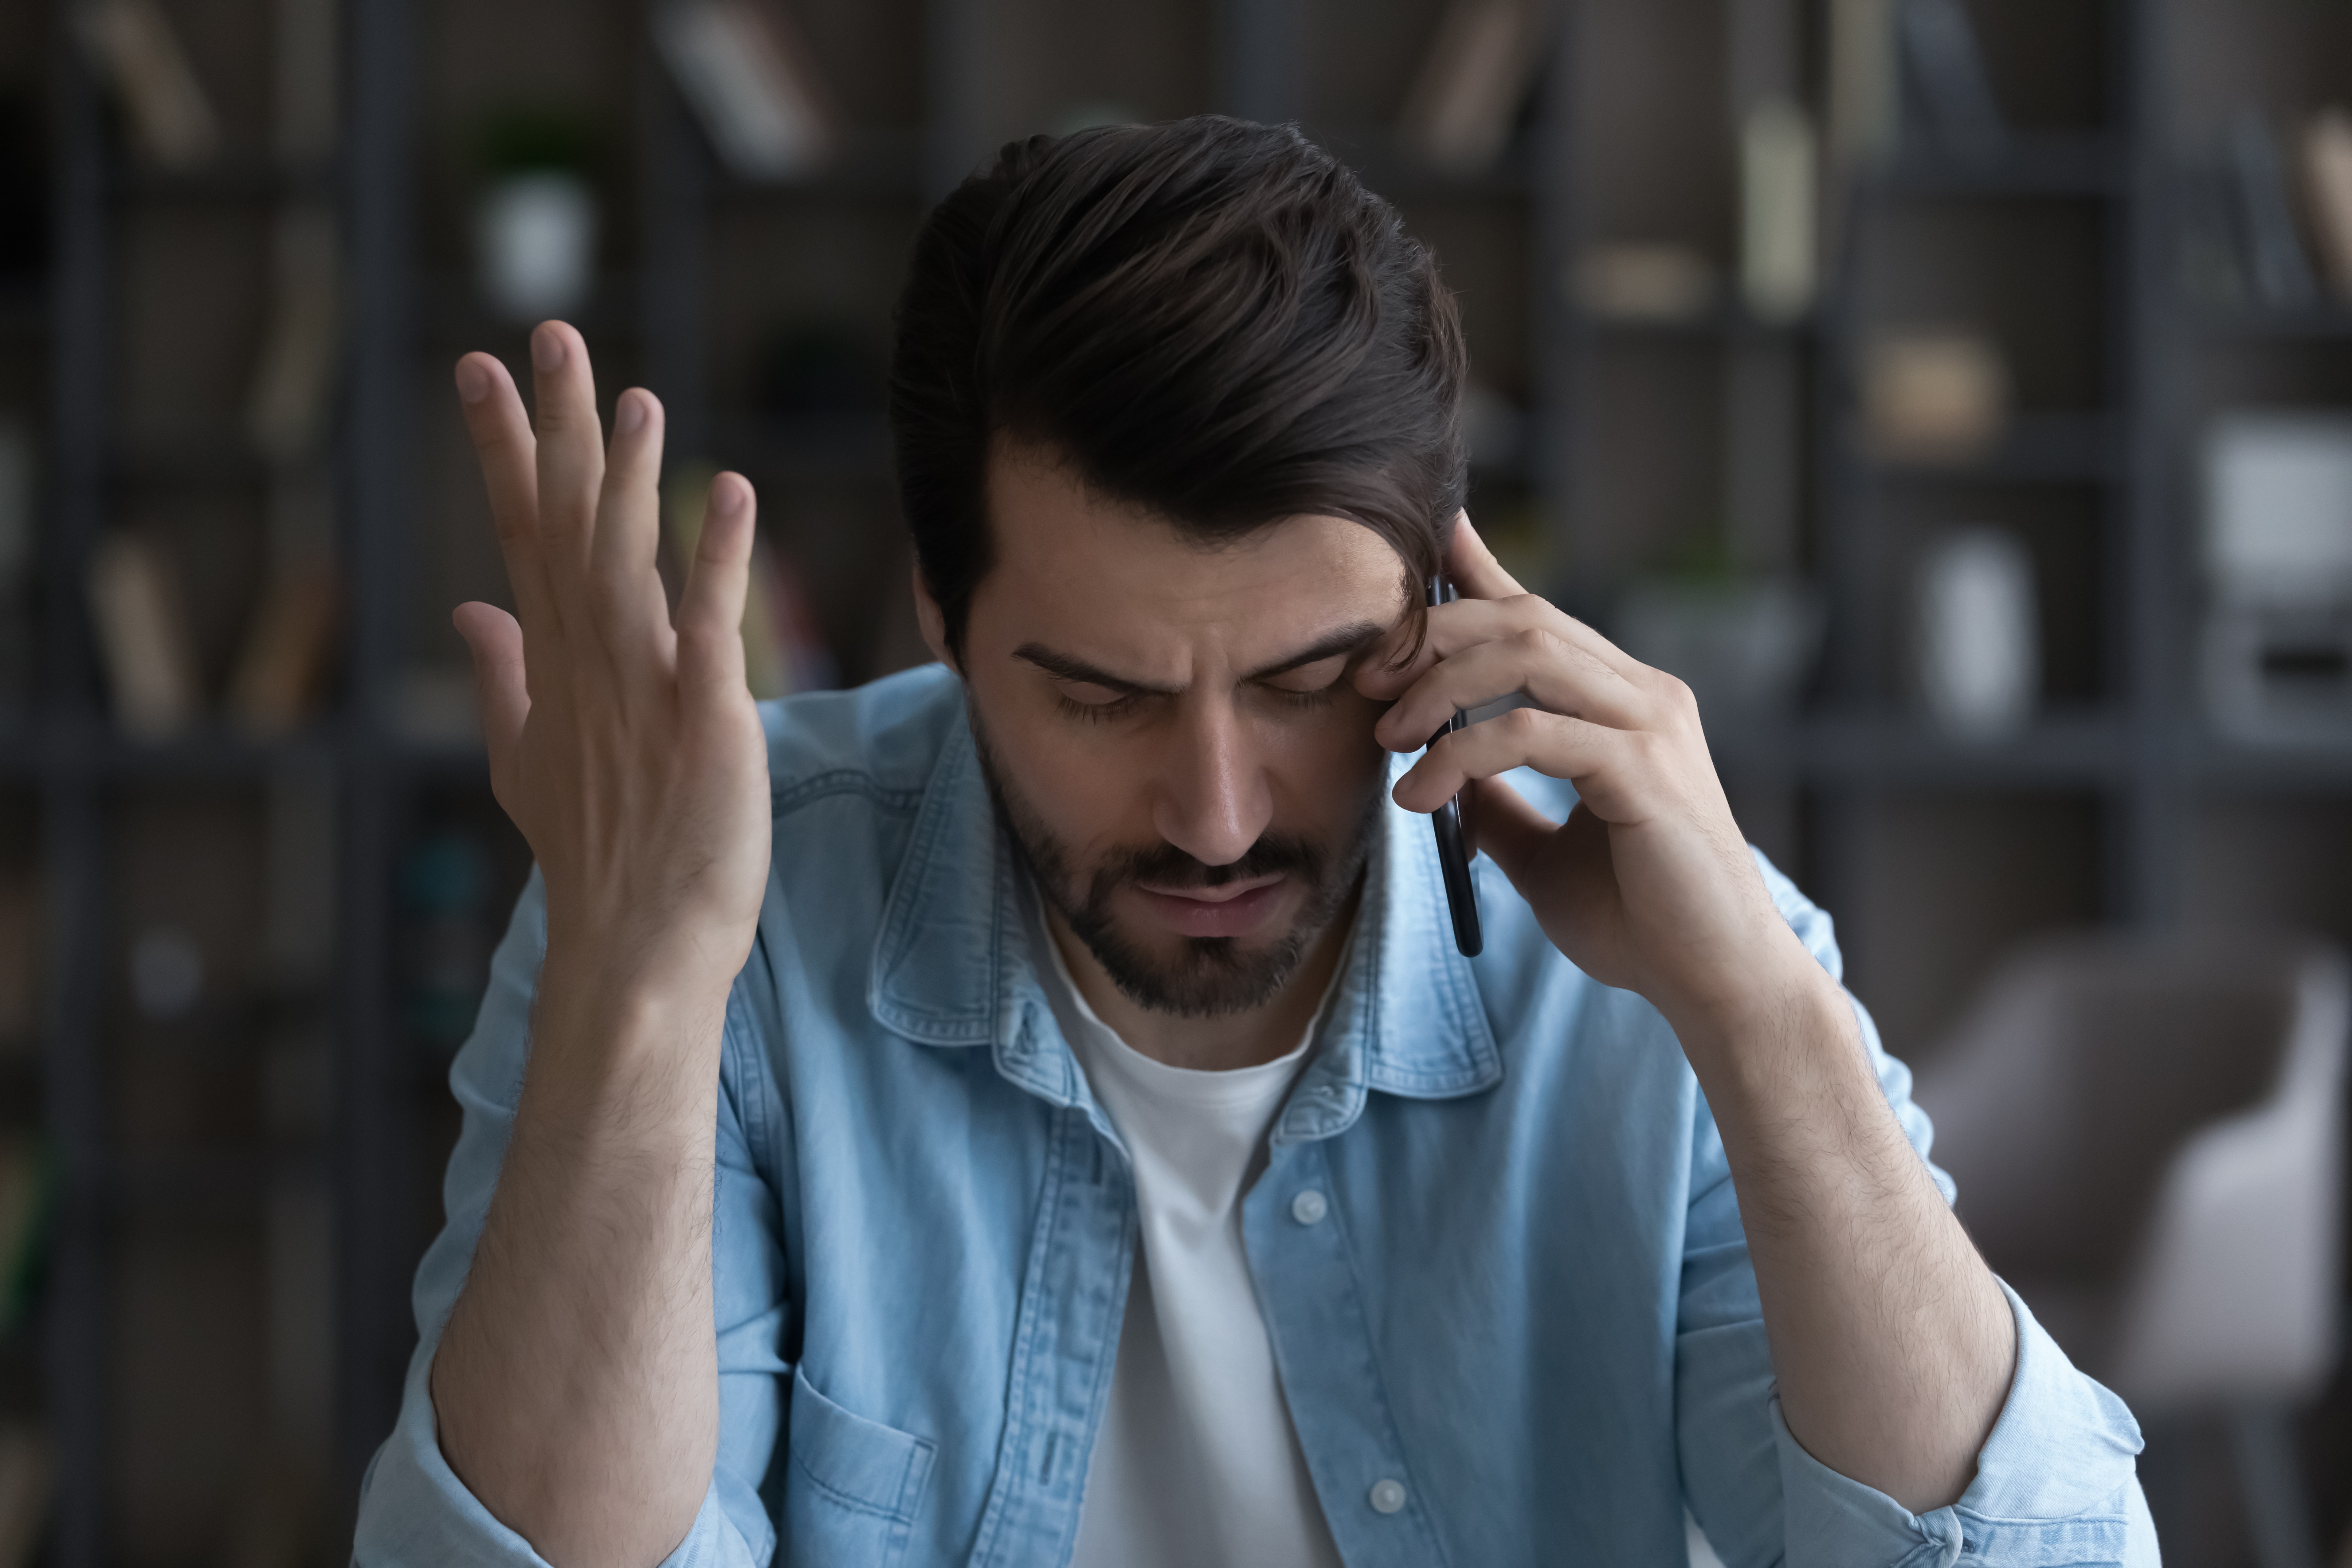 Ein gestresster Mann am Telefon | Quelle: Shutterstock